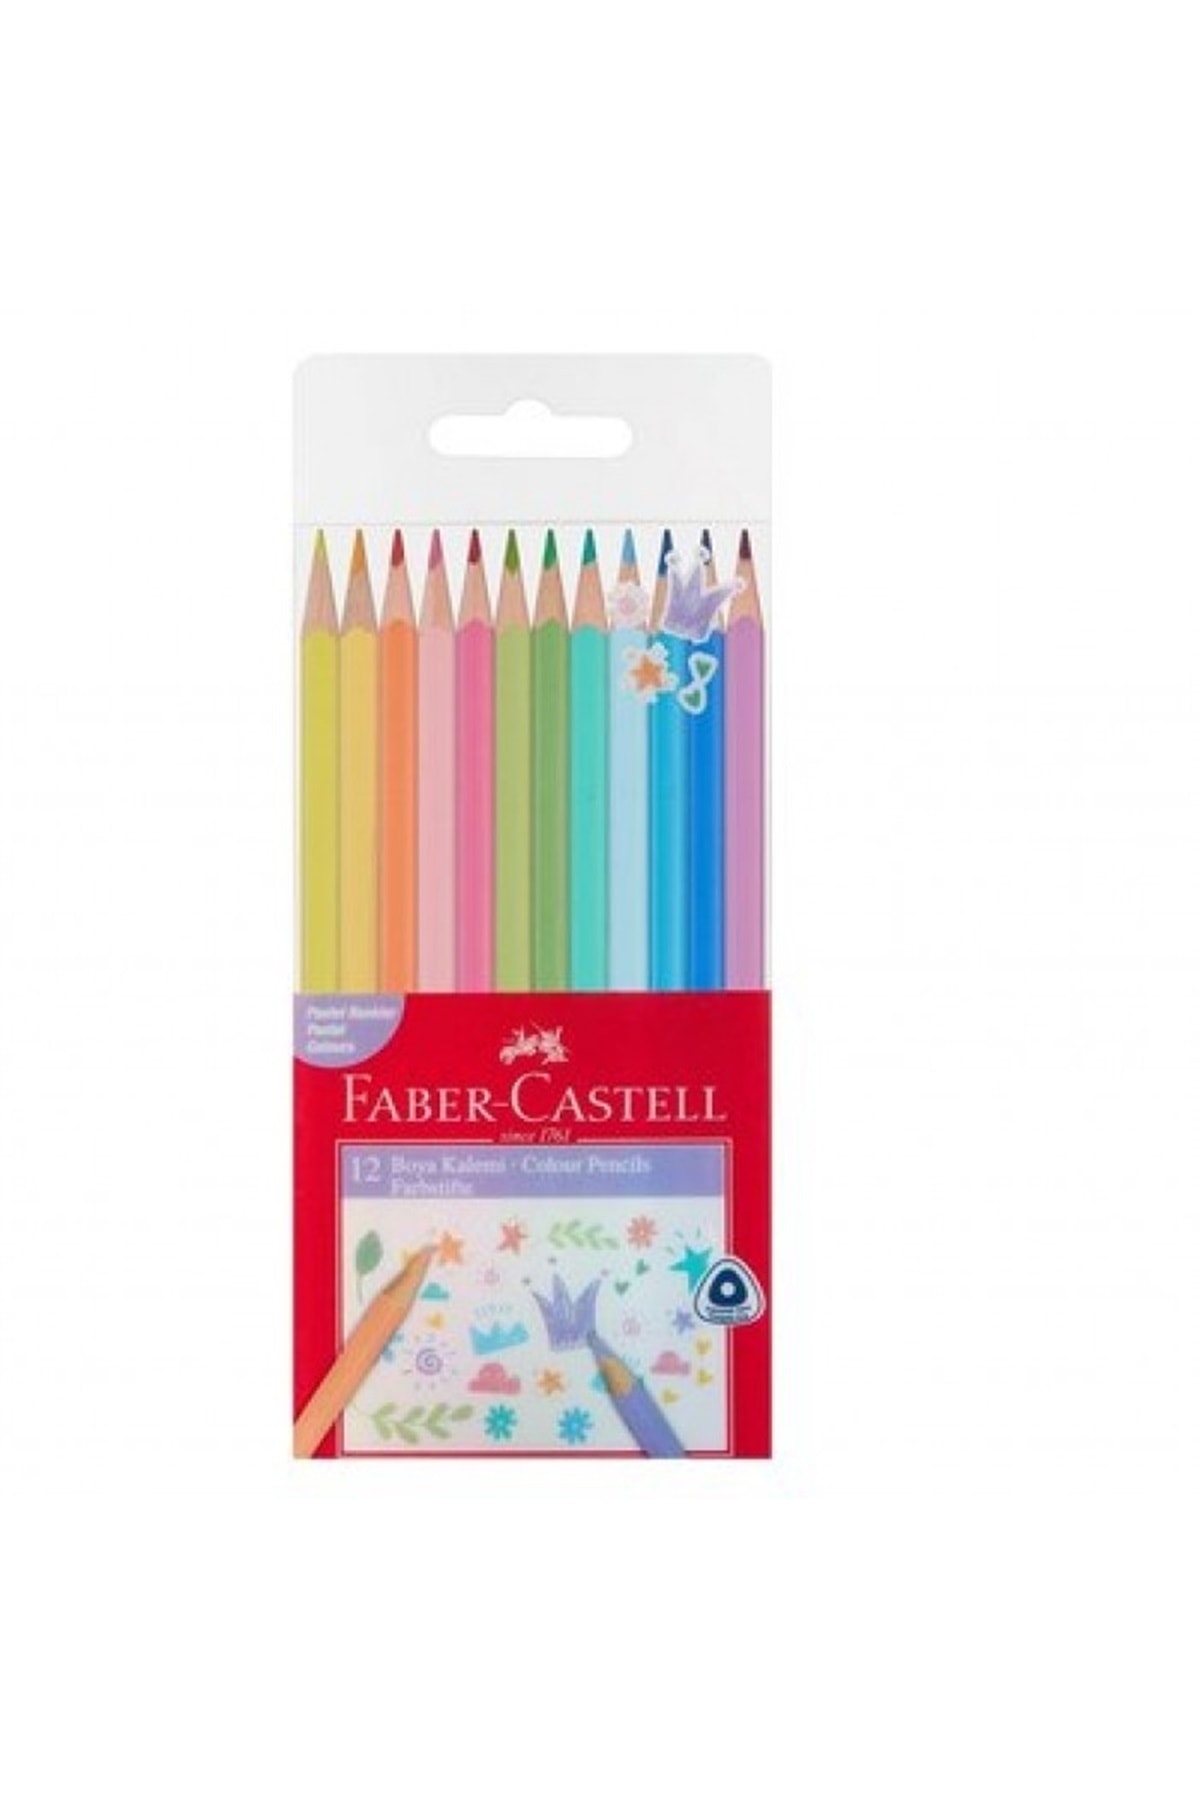 Faber Castell 12 Li Kuru Boya Kalemi - Pastel Renkler